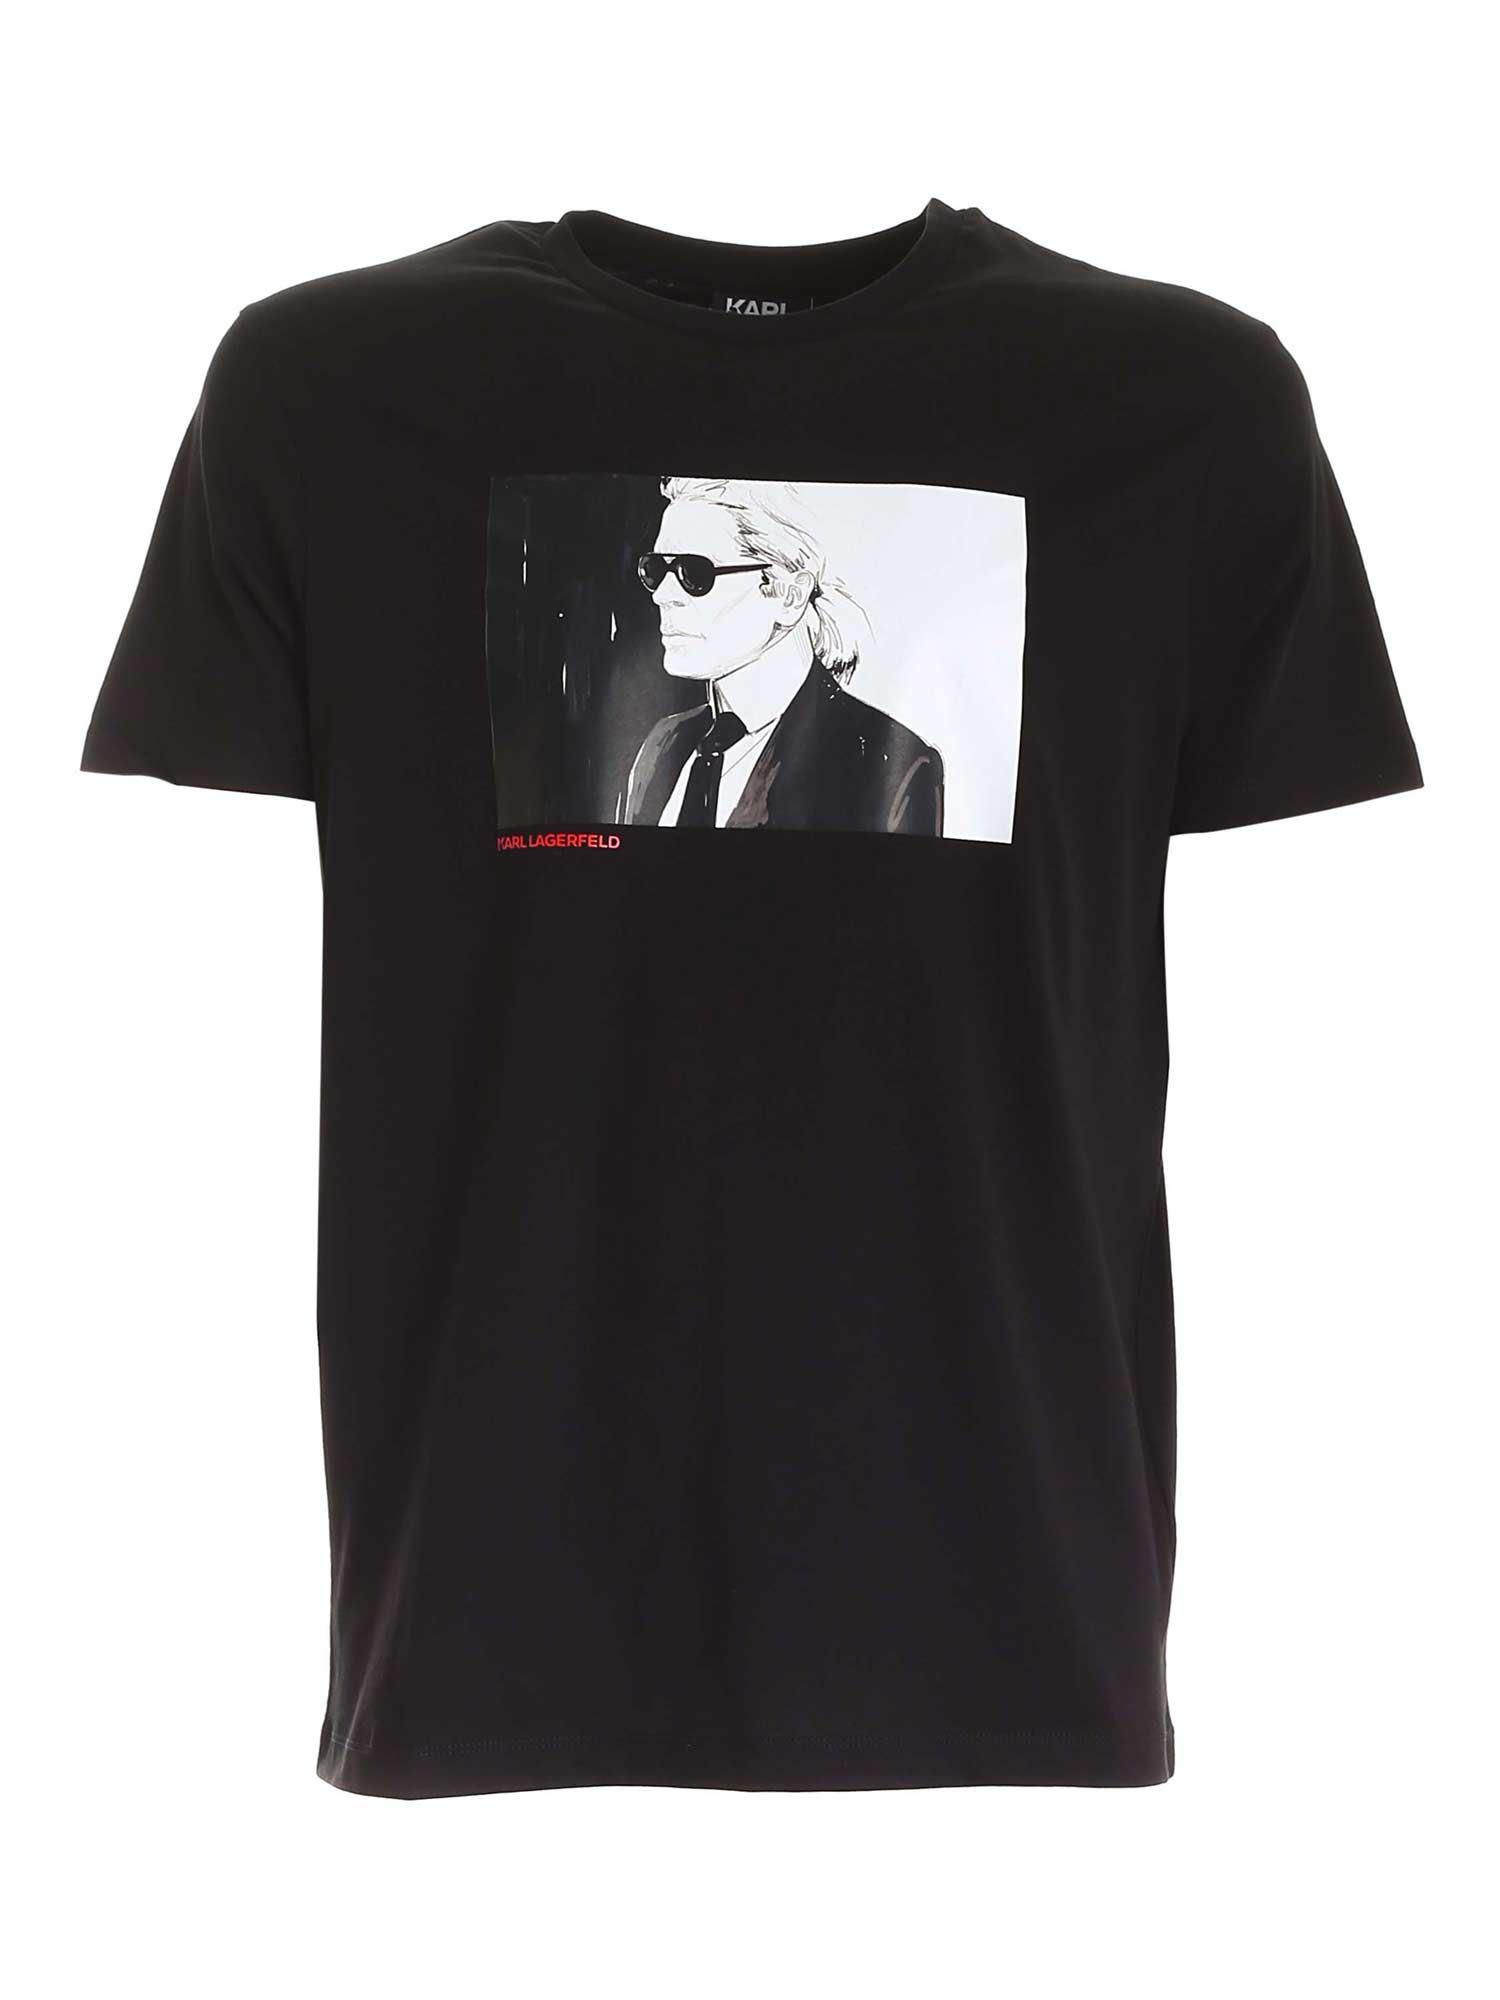 Karl Lagerfeld Cotton Contrasting Print T-shirt in Black for Men - Lyst